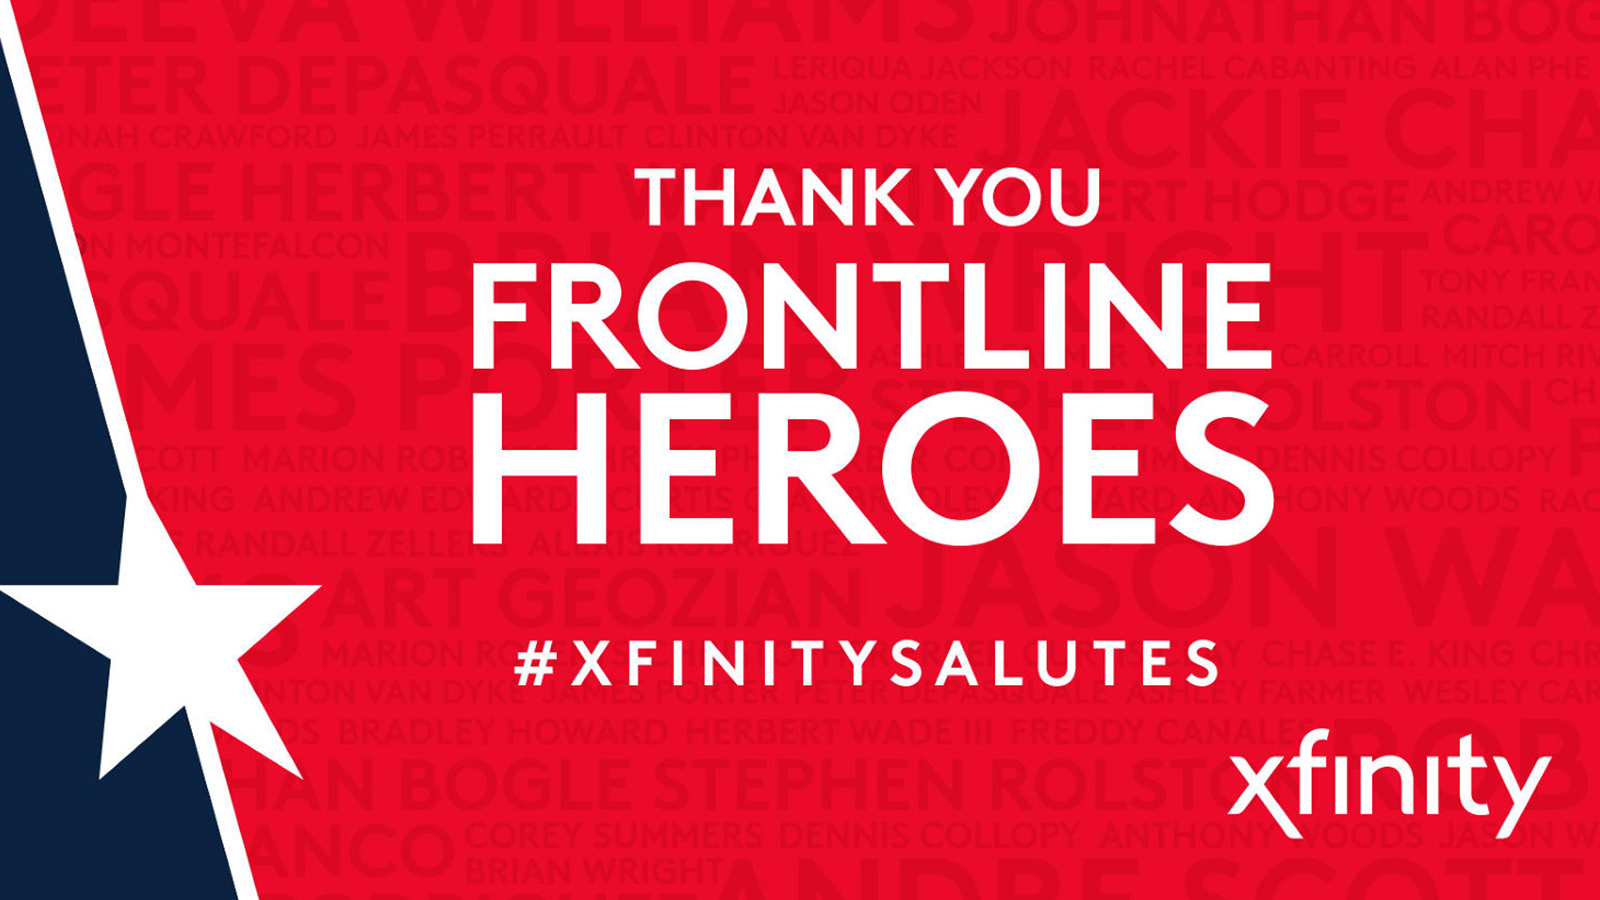 Thank You Frontline Heroes #XfinitySalutes with the Xfinity logo.